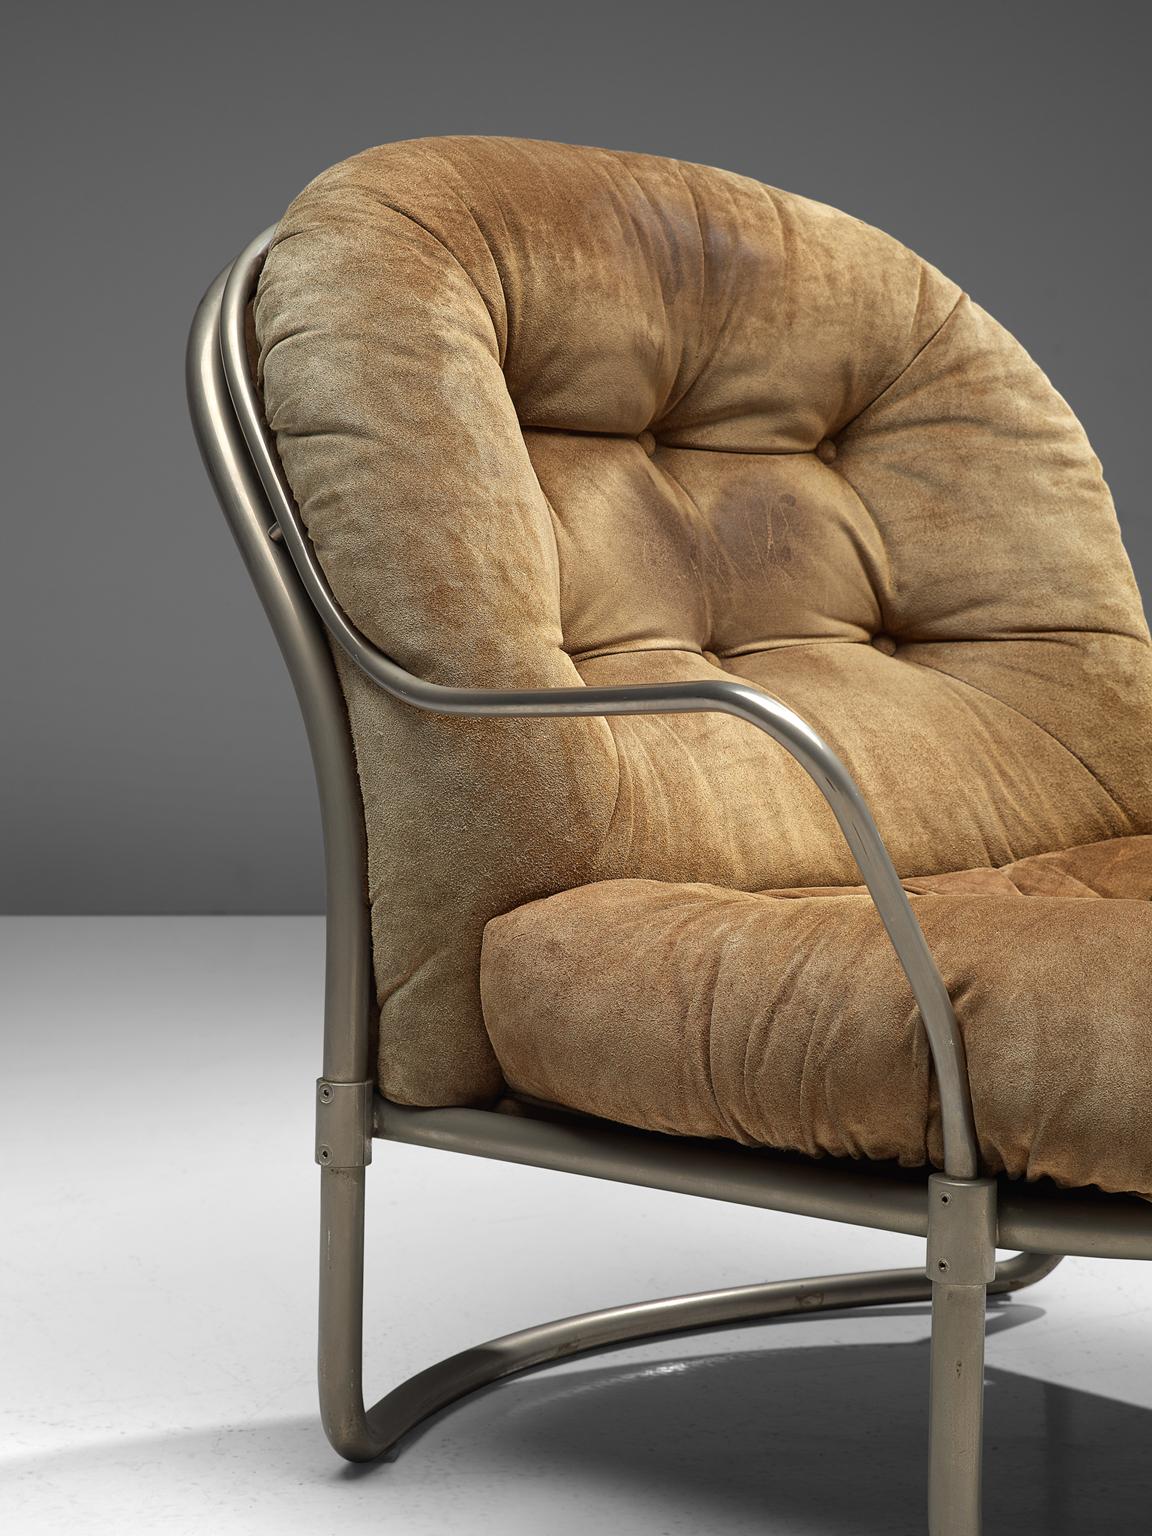 Metal Carlo de Carli Tubular Lounge Chair with Cognac Suede Seat